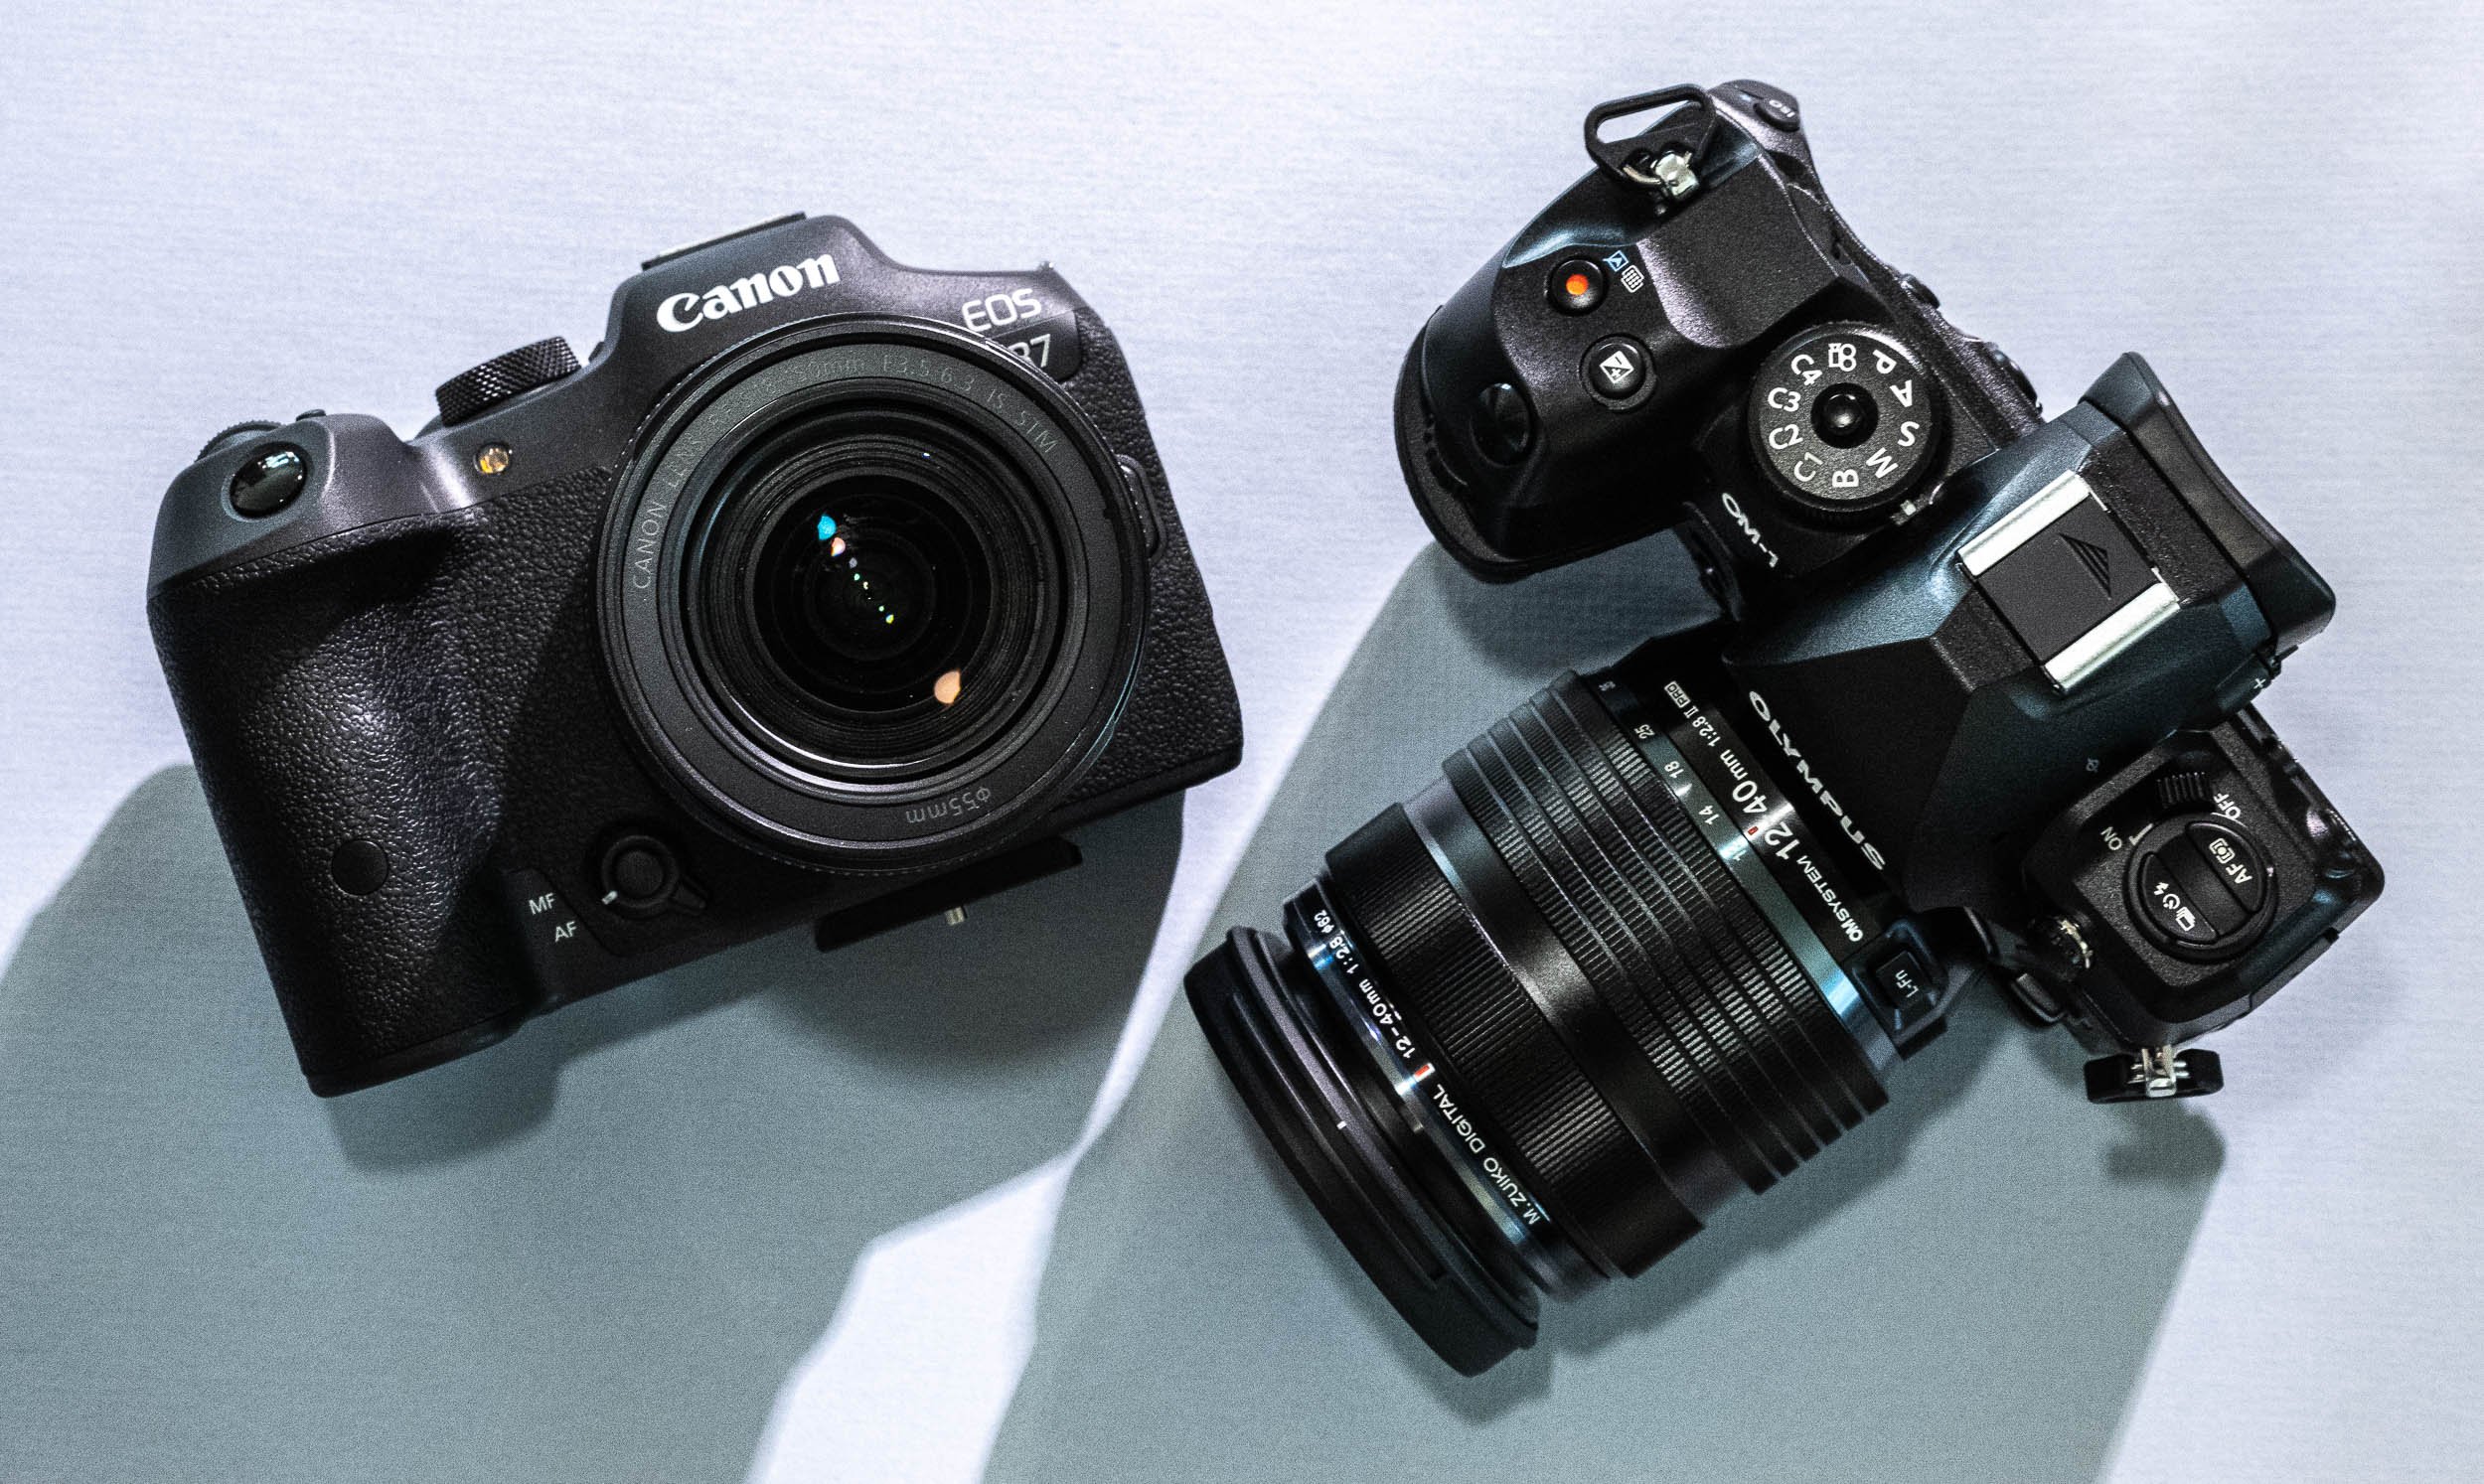 Canon R7 vs. OM Systems Olympus OM-1: An In-Depth Camera